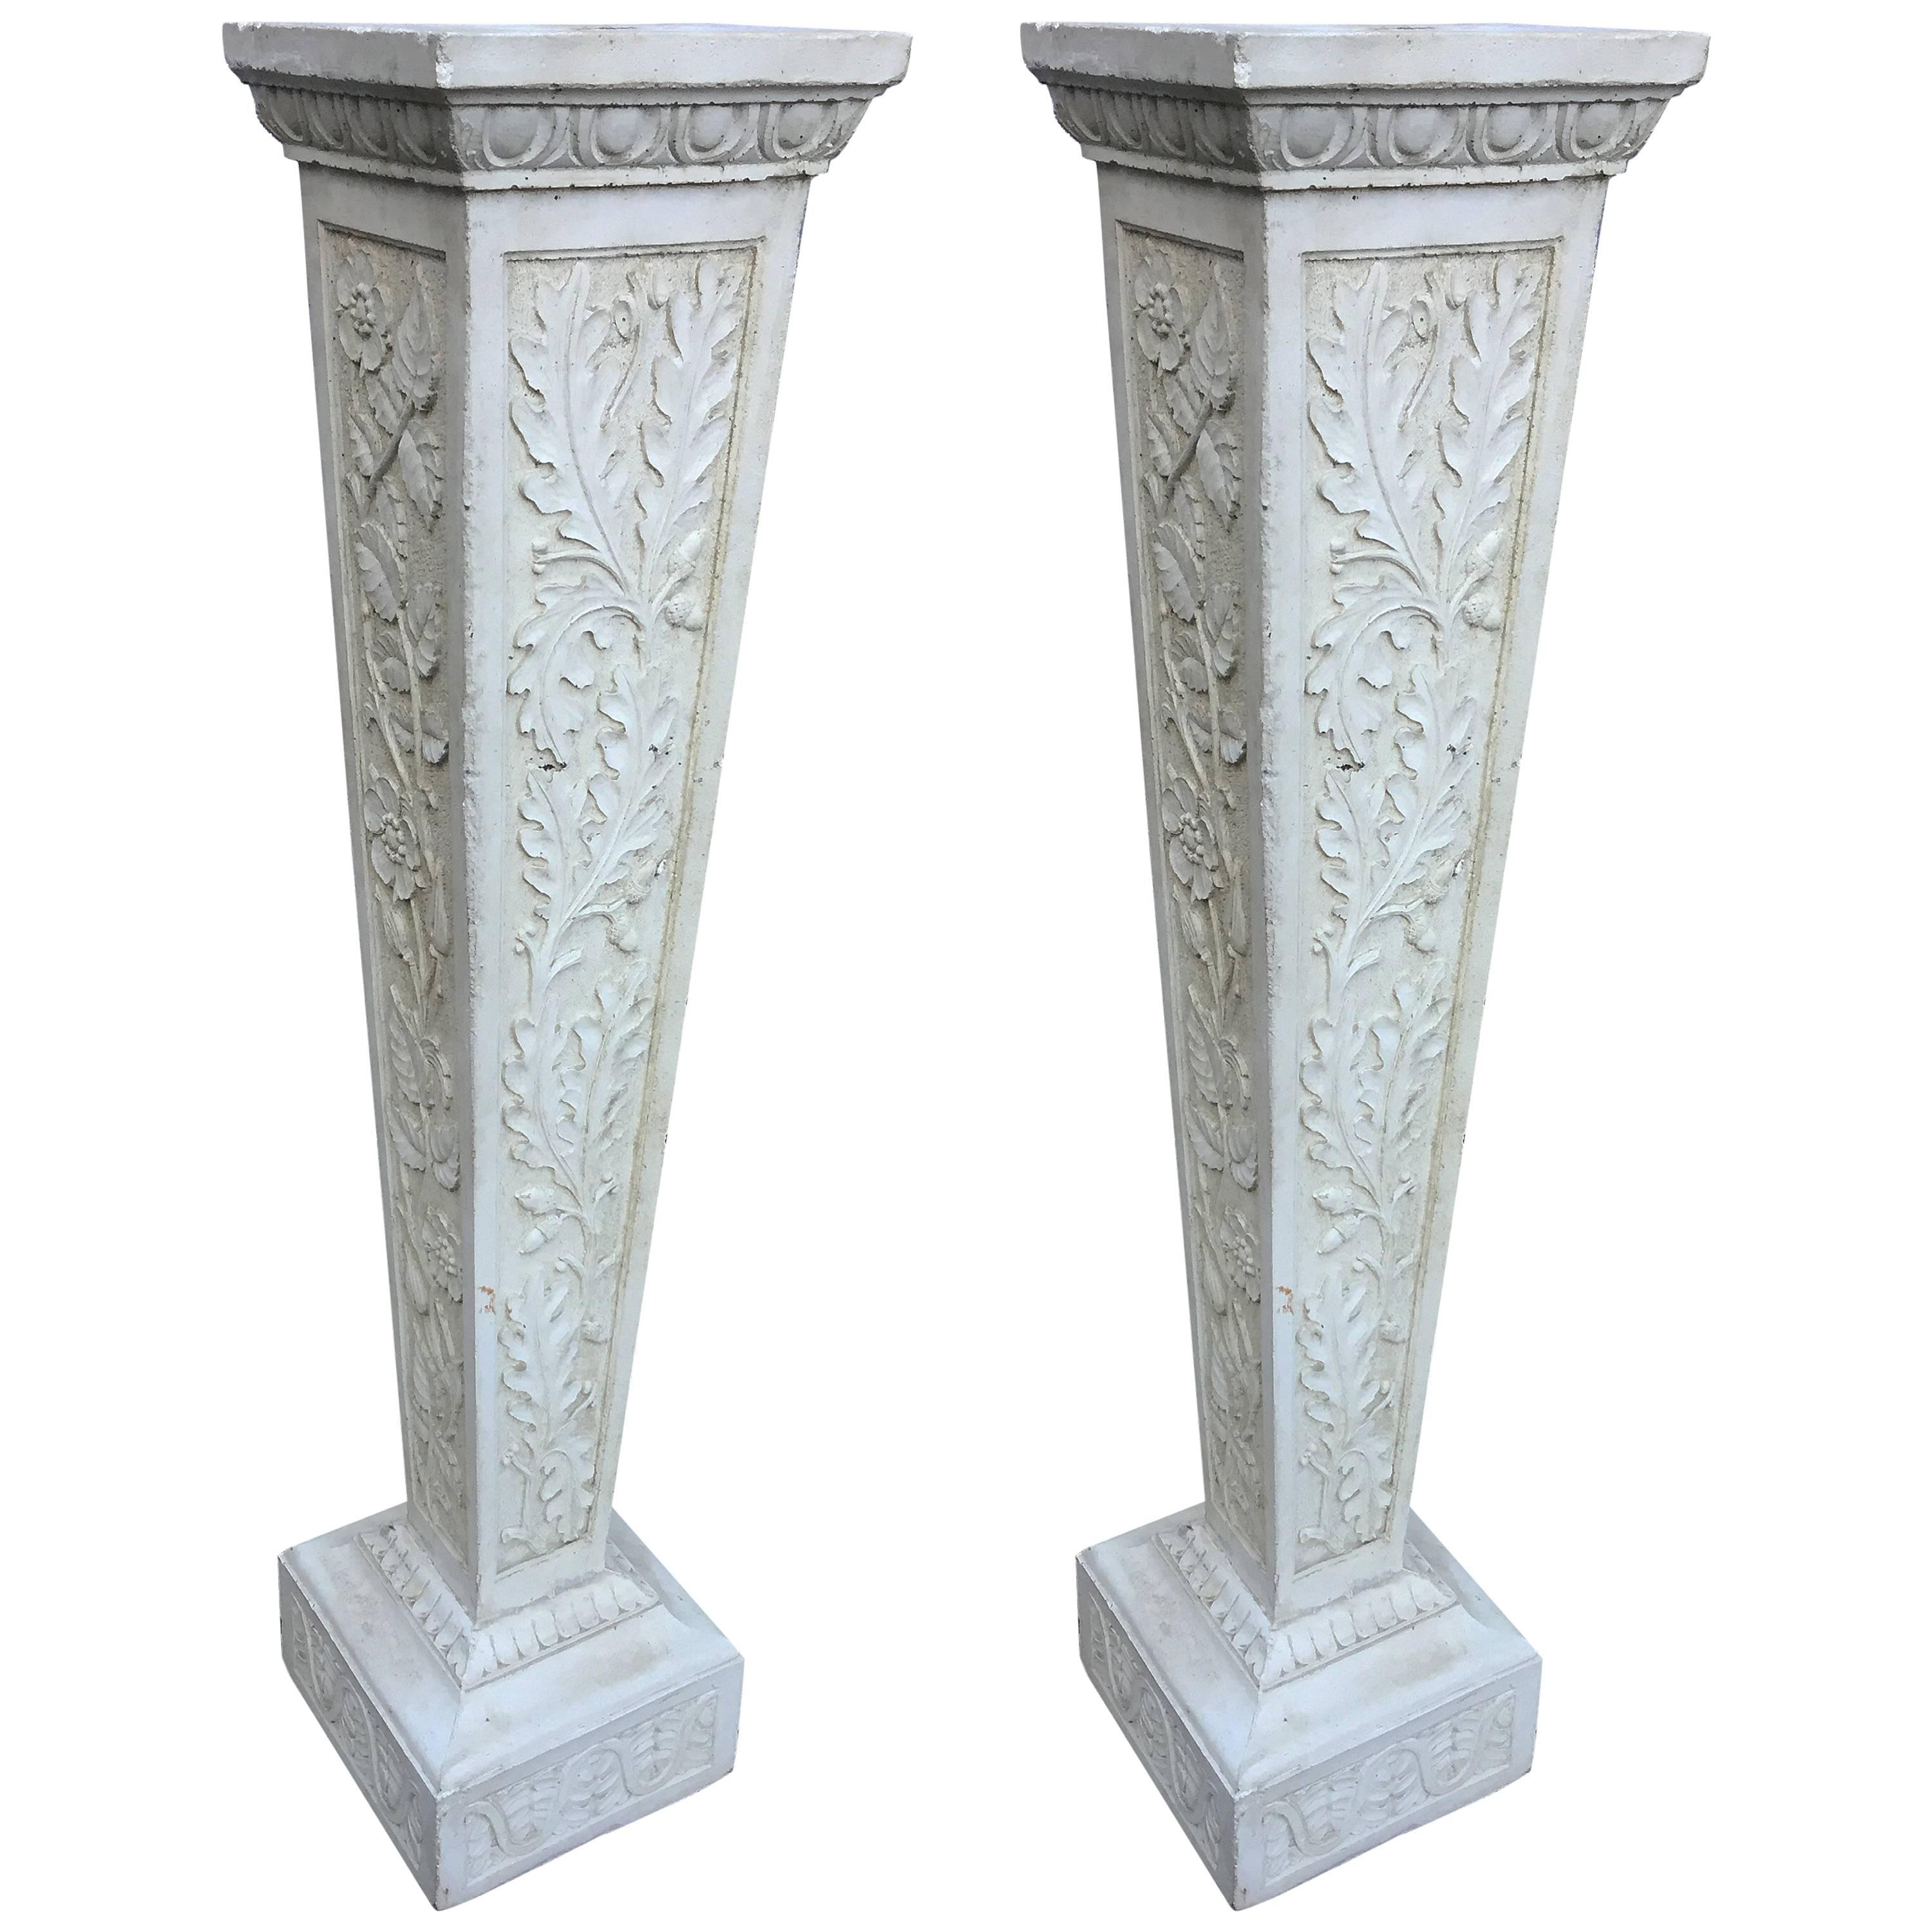 Pair of Art Nouveau Pedestals in Reconstituted Stone